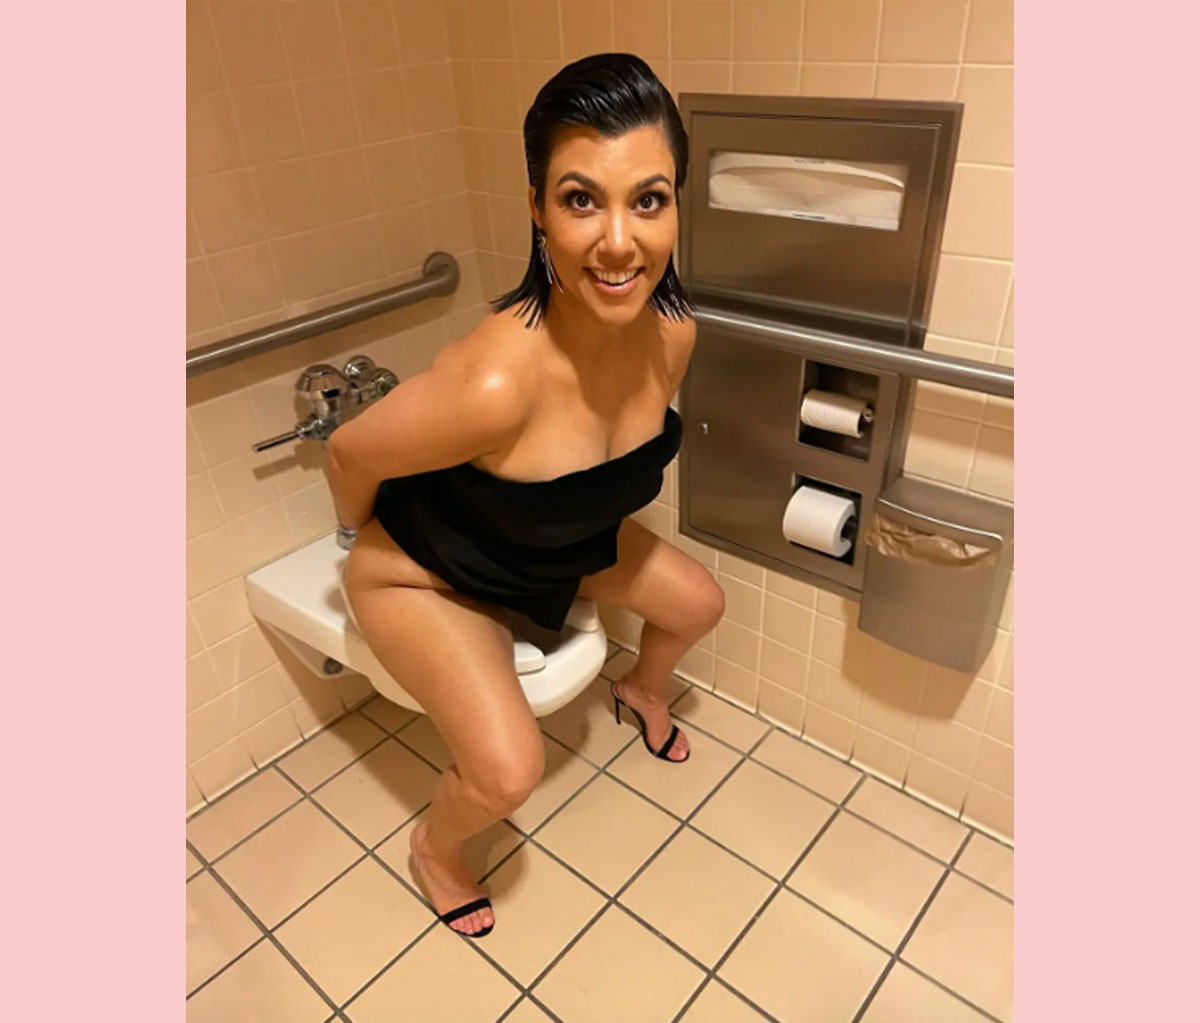 travis barker kourtney kardashian toilet pic